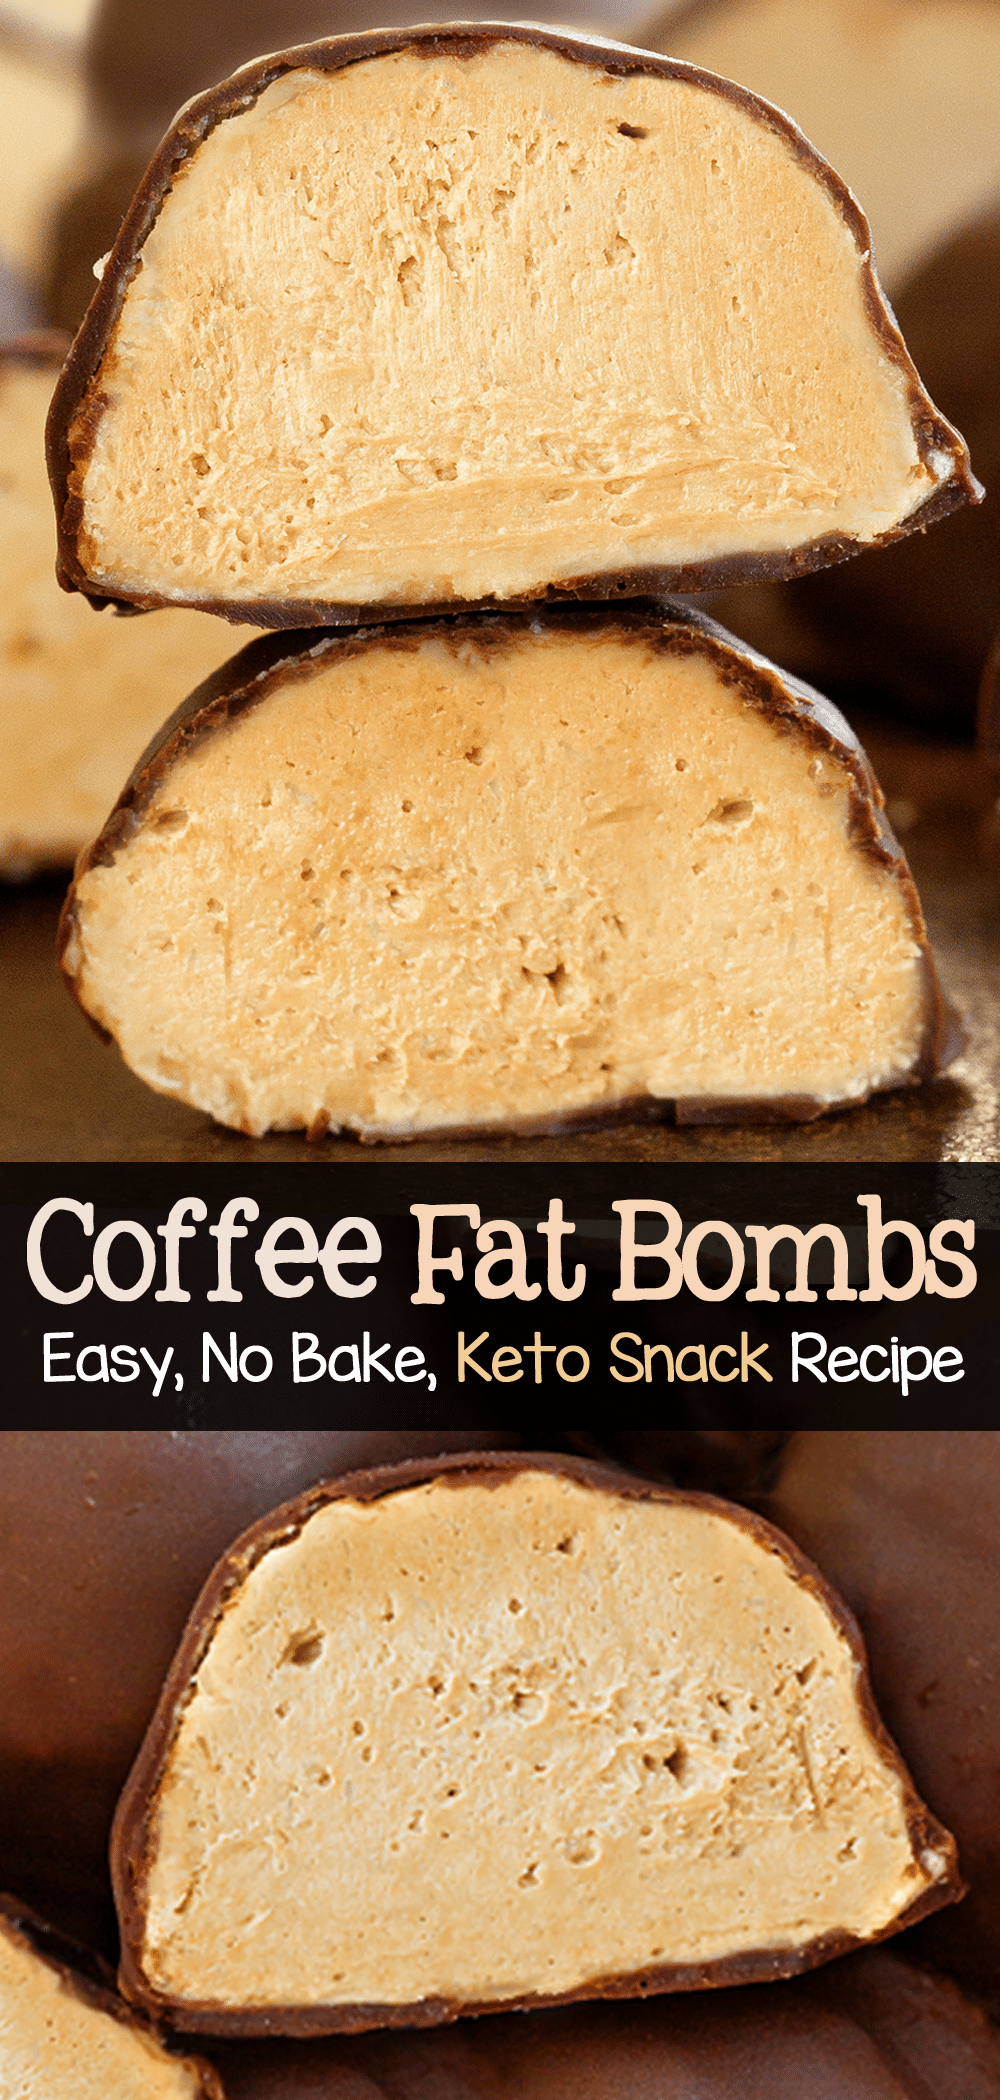 Keto Snack Coffee Fat Bombs